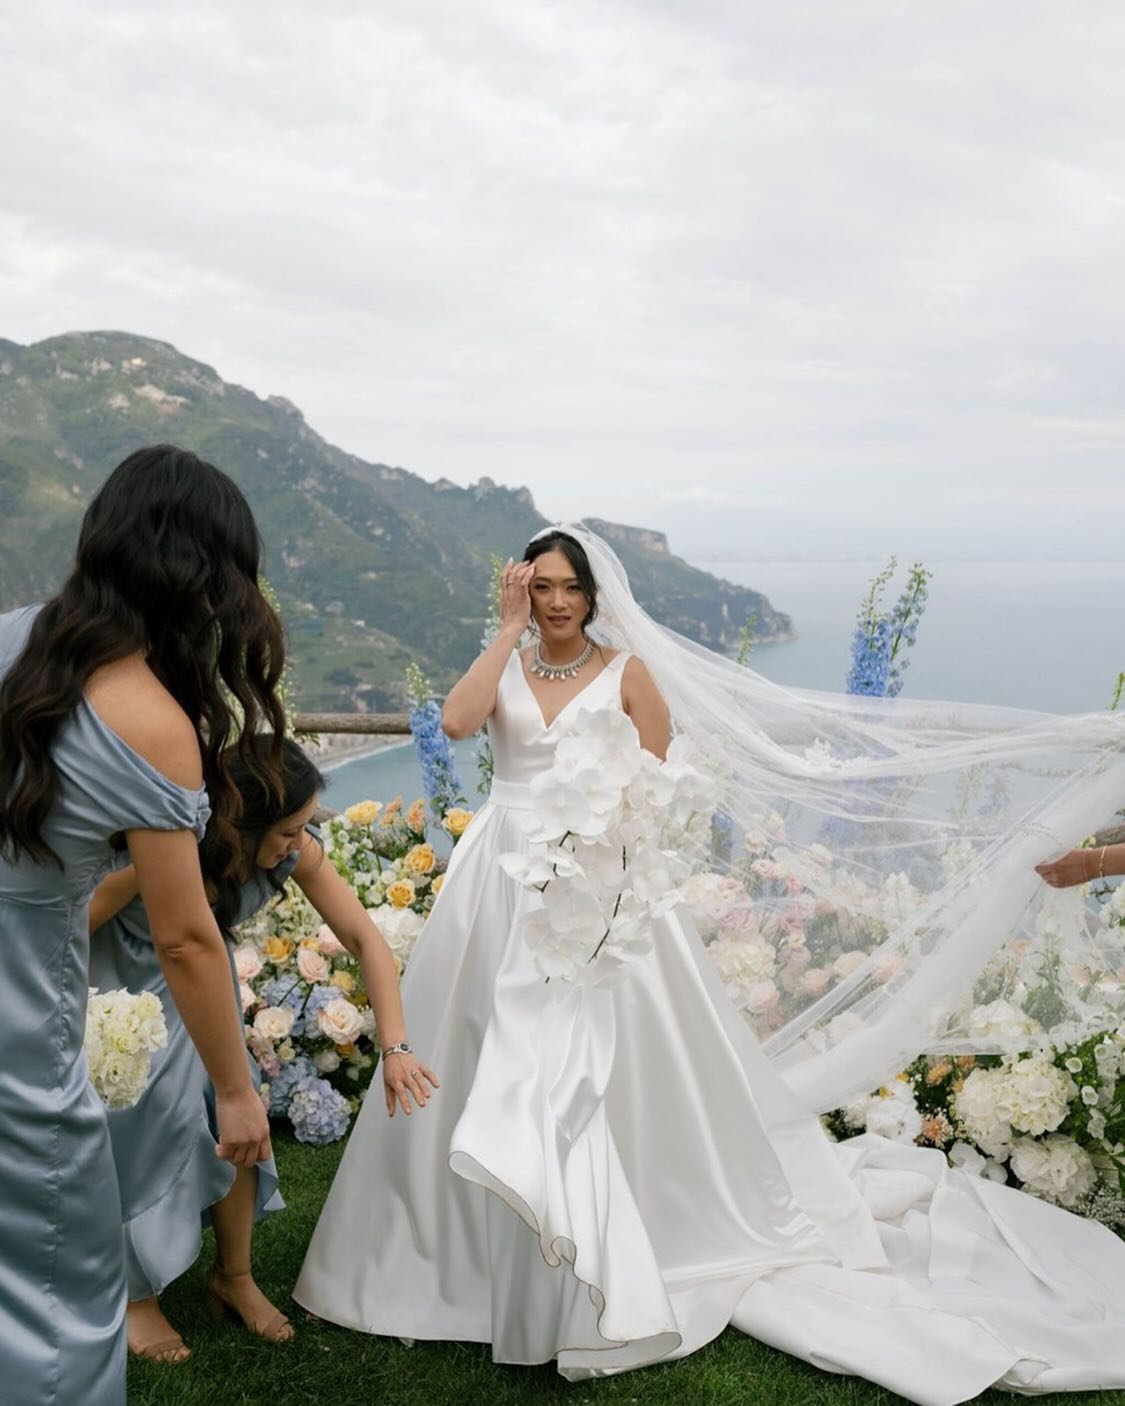 Iconic. 

Captured by @sydneemariephoto 
Florals @theweddingboutiqueitaly

#italianwedding #amalfiwedding #weddingdesign #weddingstyle #italyweddingplanner #italianweddingplanner